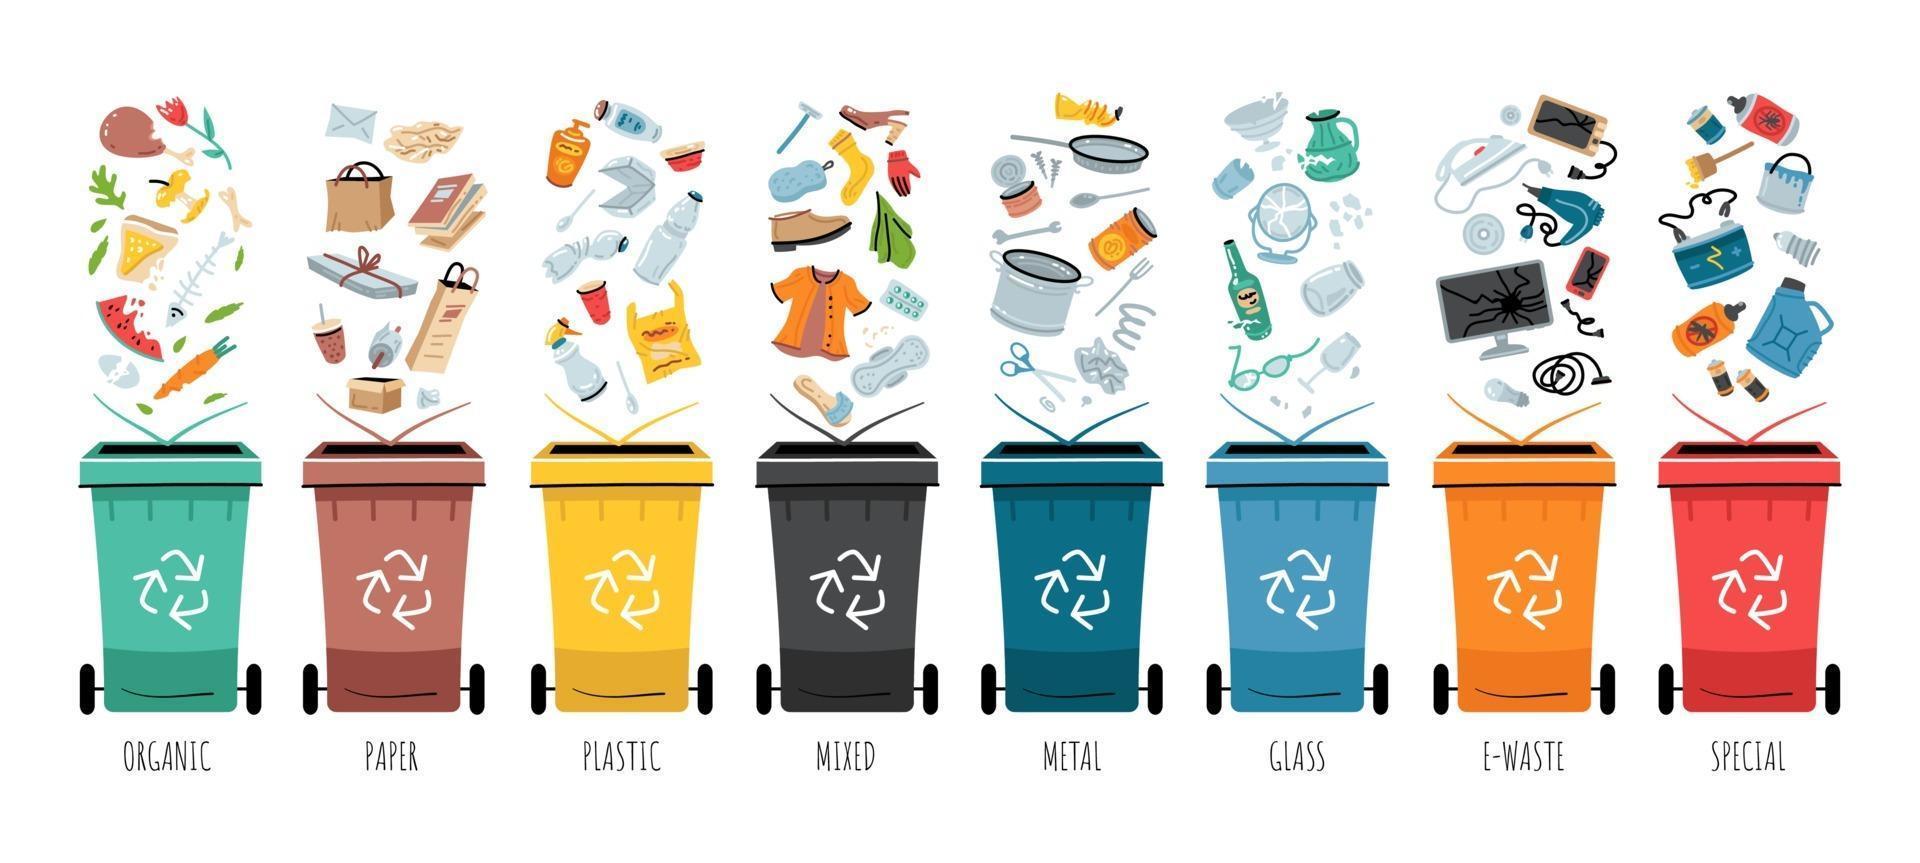 Abfallsammlung, -trennung und -recyclingillustration. Müll vektor